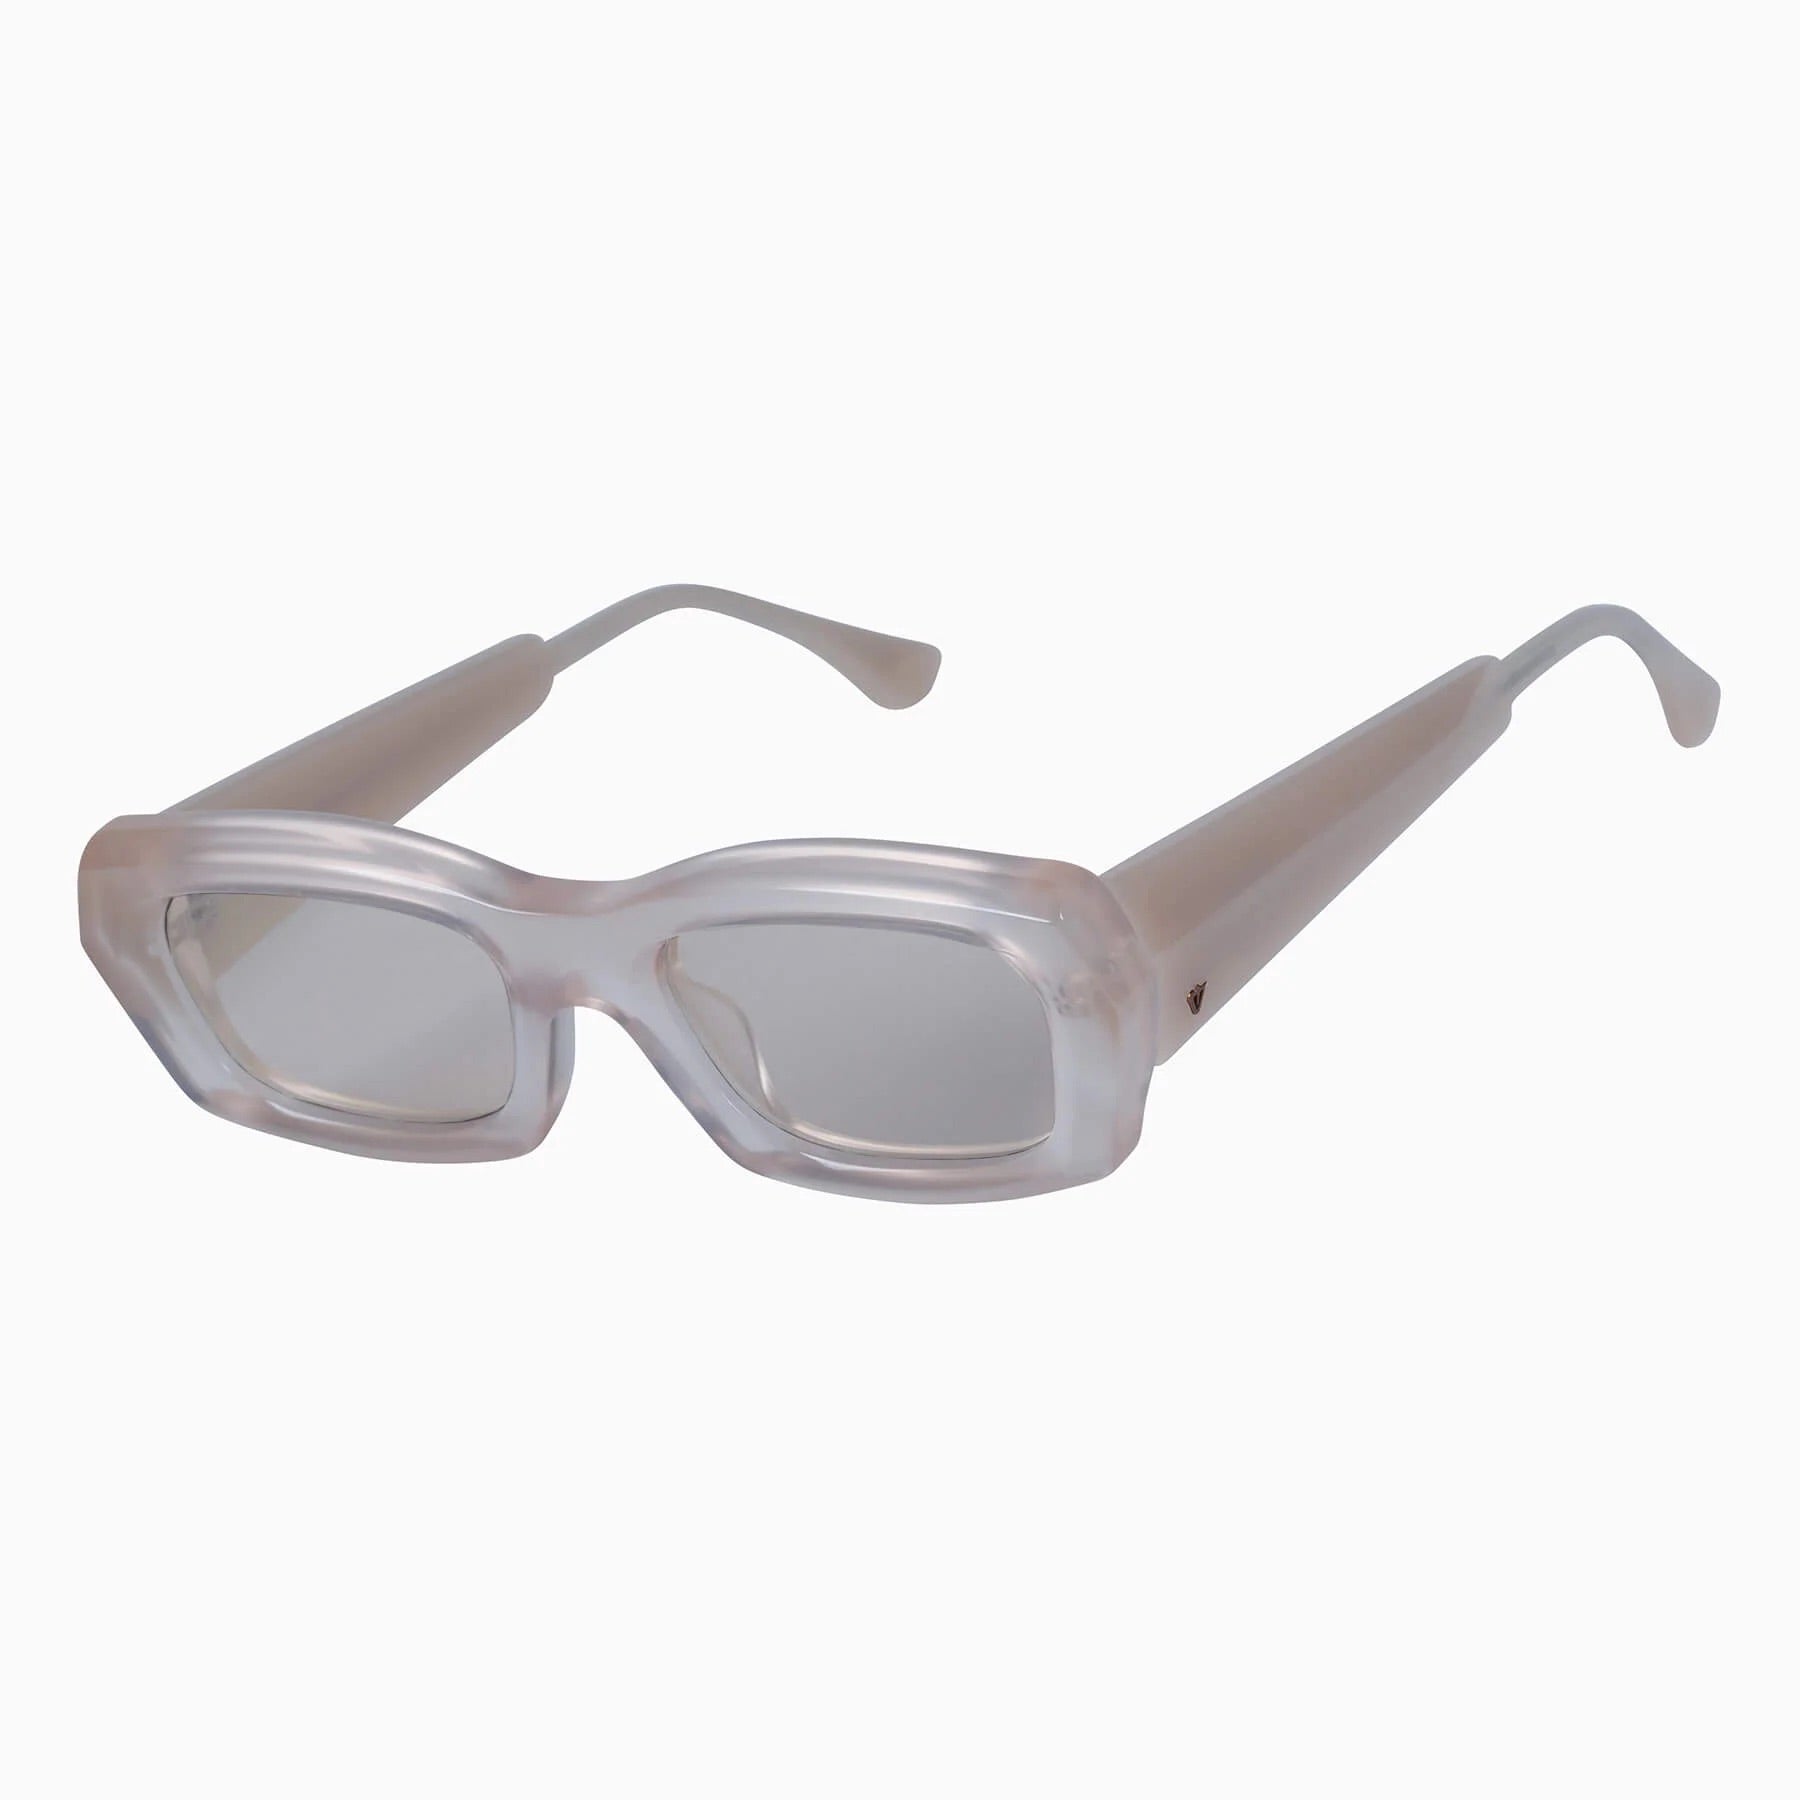 Valley Eyewear | Holycity | Sunglasses - Desert Sand w. Bone Temples / Light Brown Lens